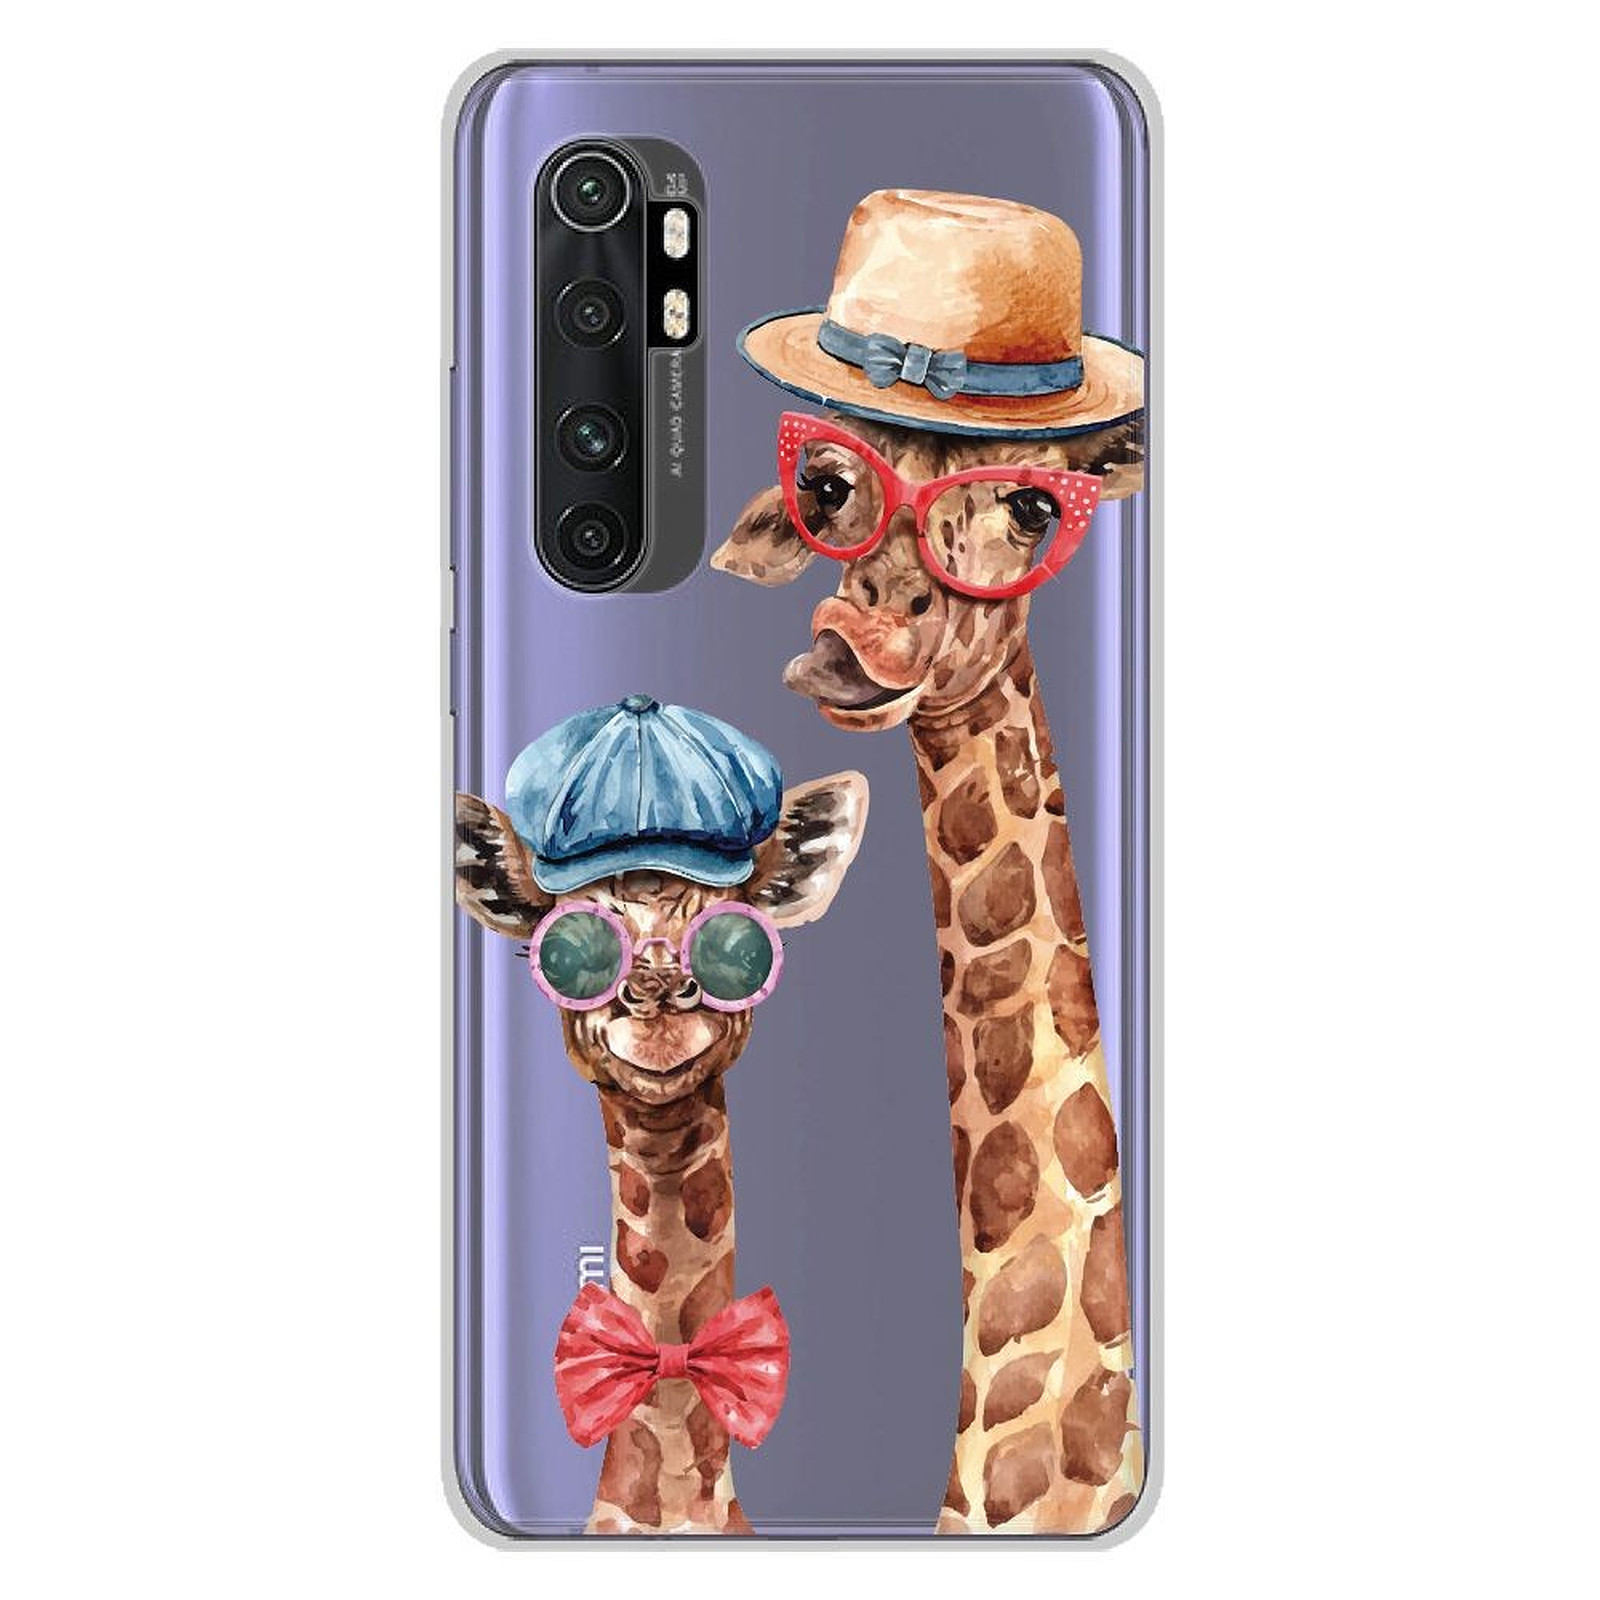 1001 Coques Coque silicone gel Xiaomi Mi Note 10 lite motif Funny Girafe - Coque telephone 1001Coques